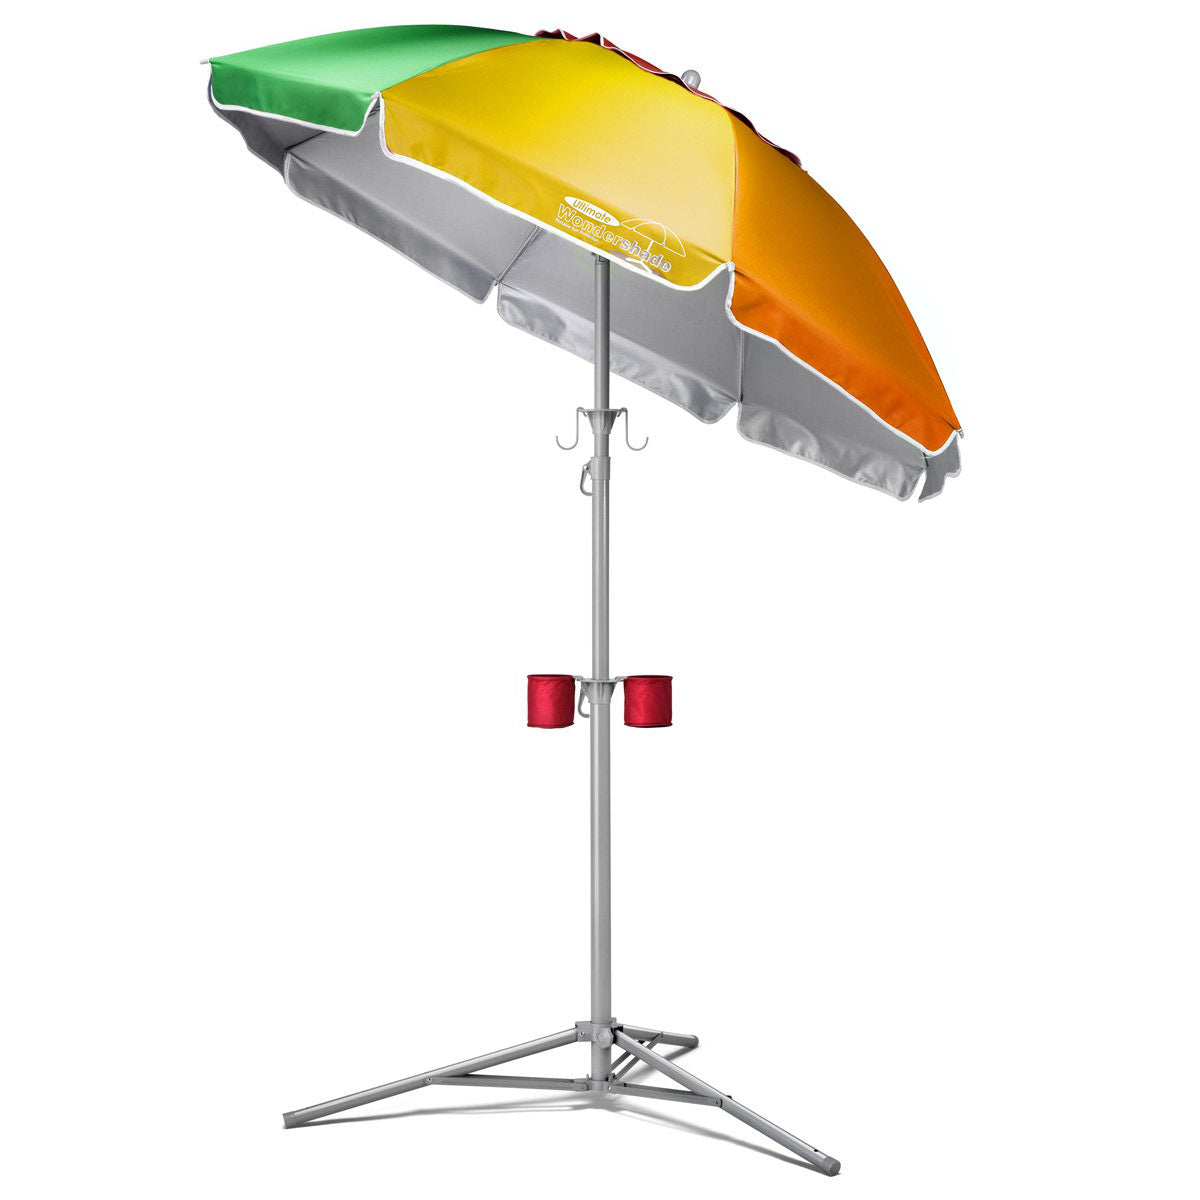 Ultimate Wondershade portable shade, rainbow, with cupholders, alternate view